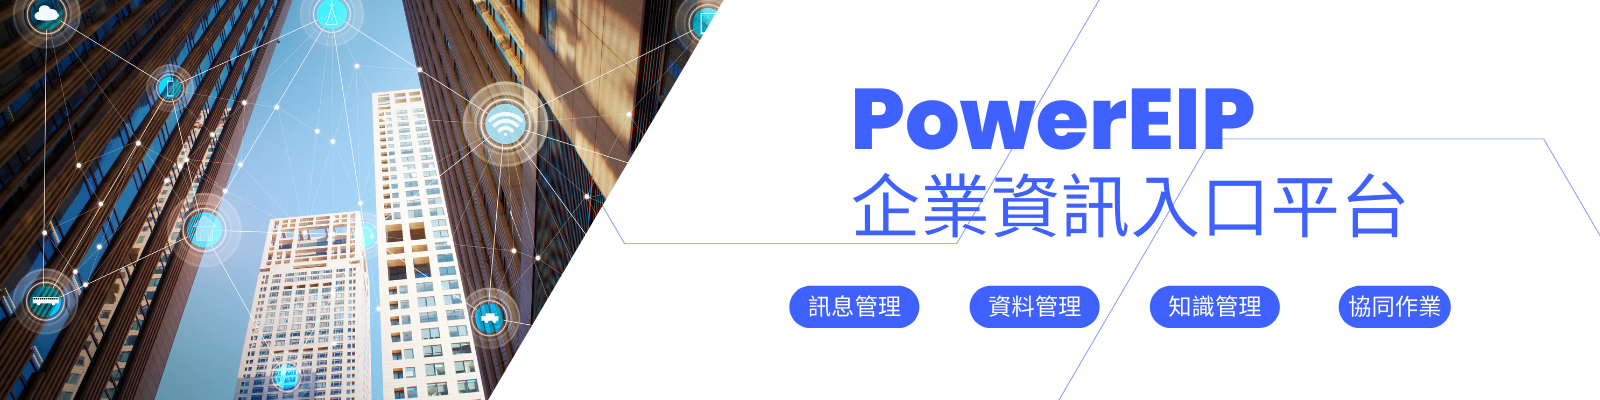 【EIP】PowerEIP企業資訊入口平台